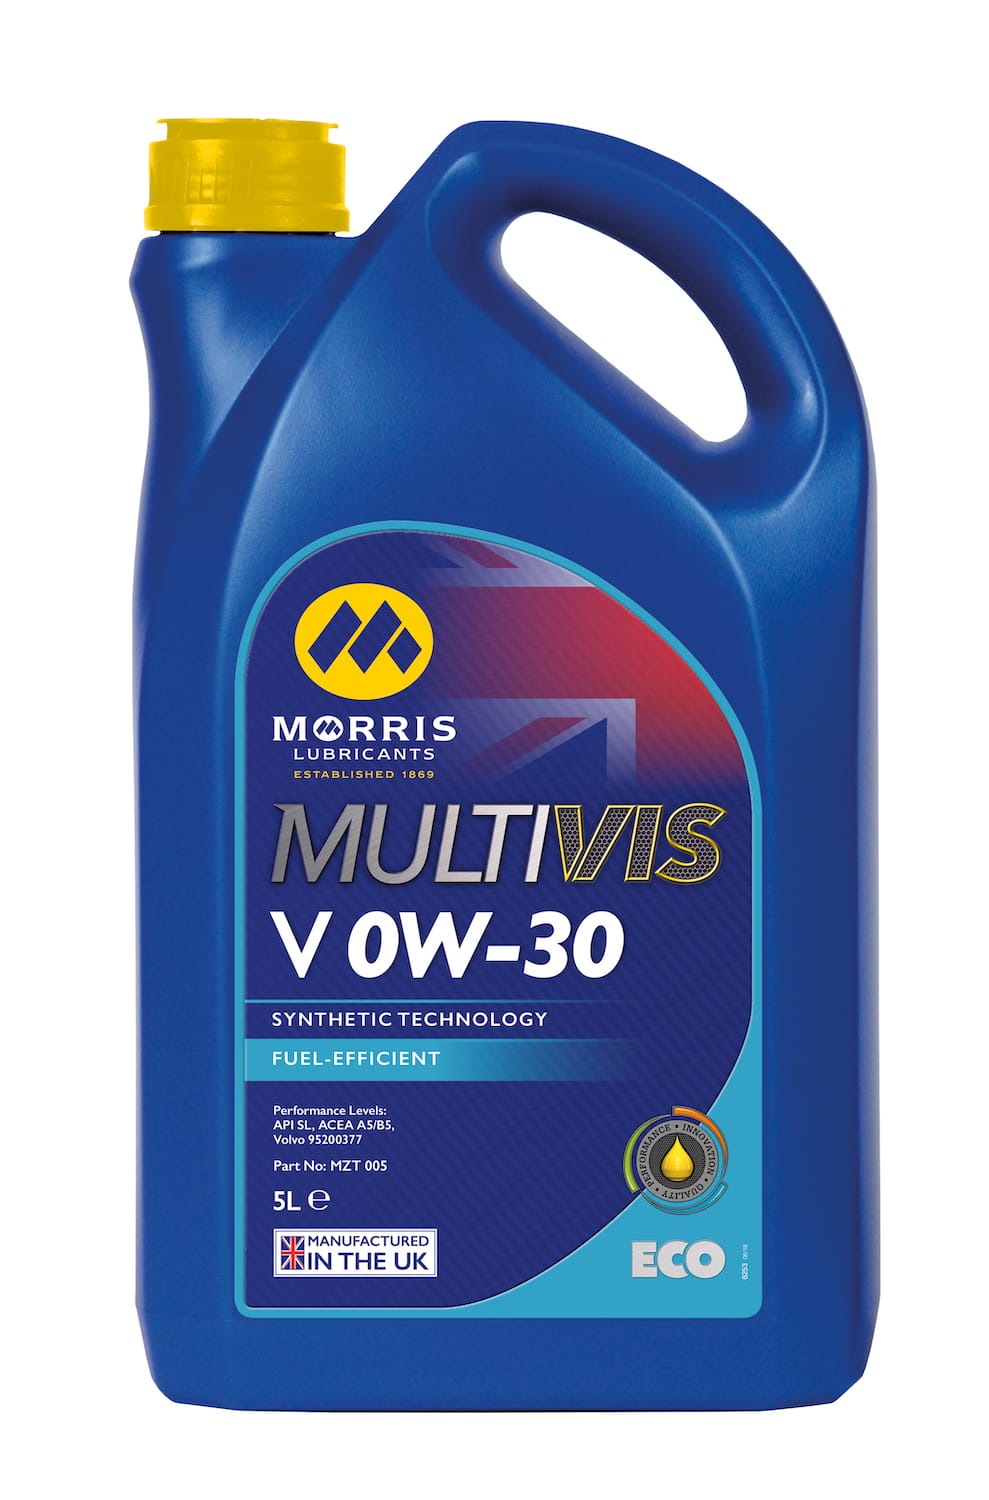 Multivis ECO V 0W-30 